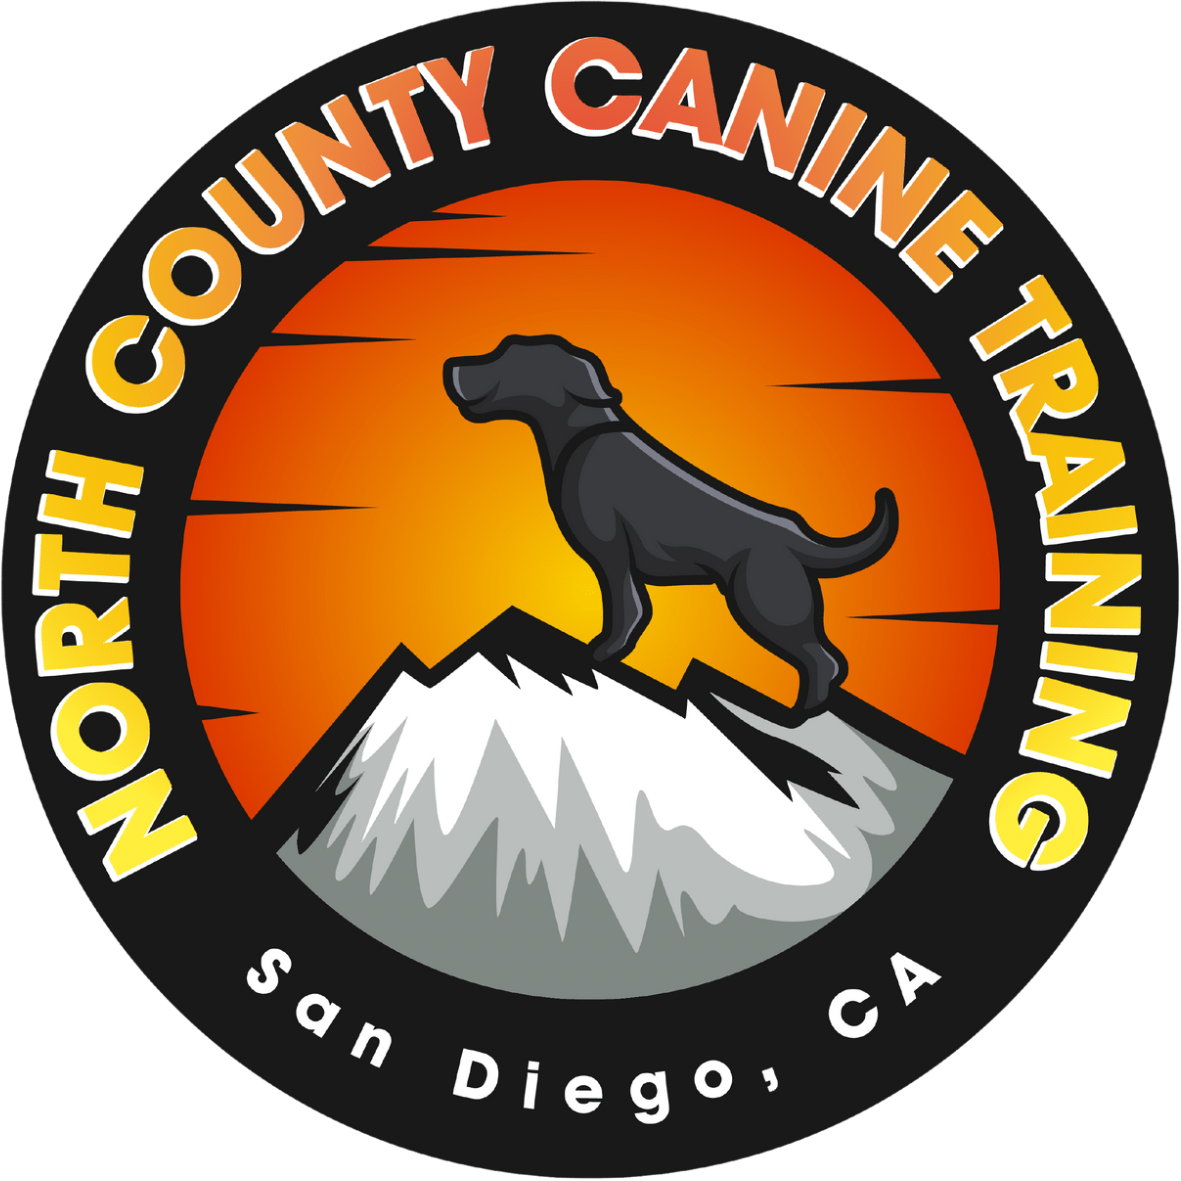 North County Canine Training Logo